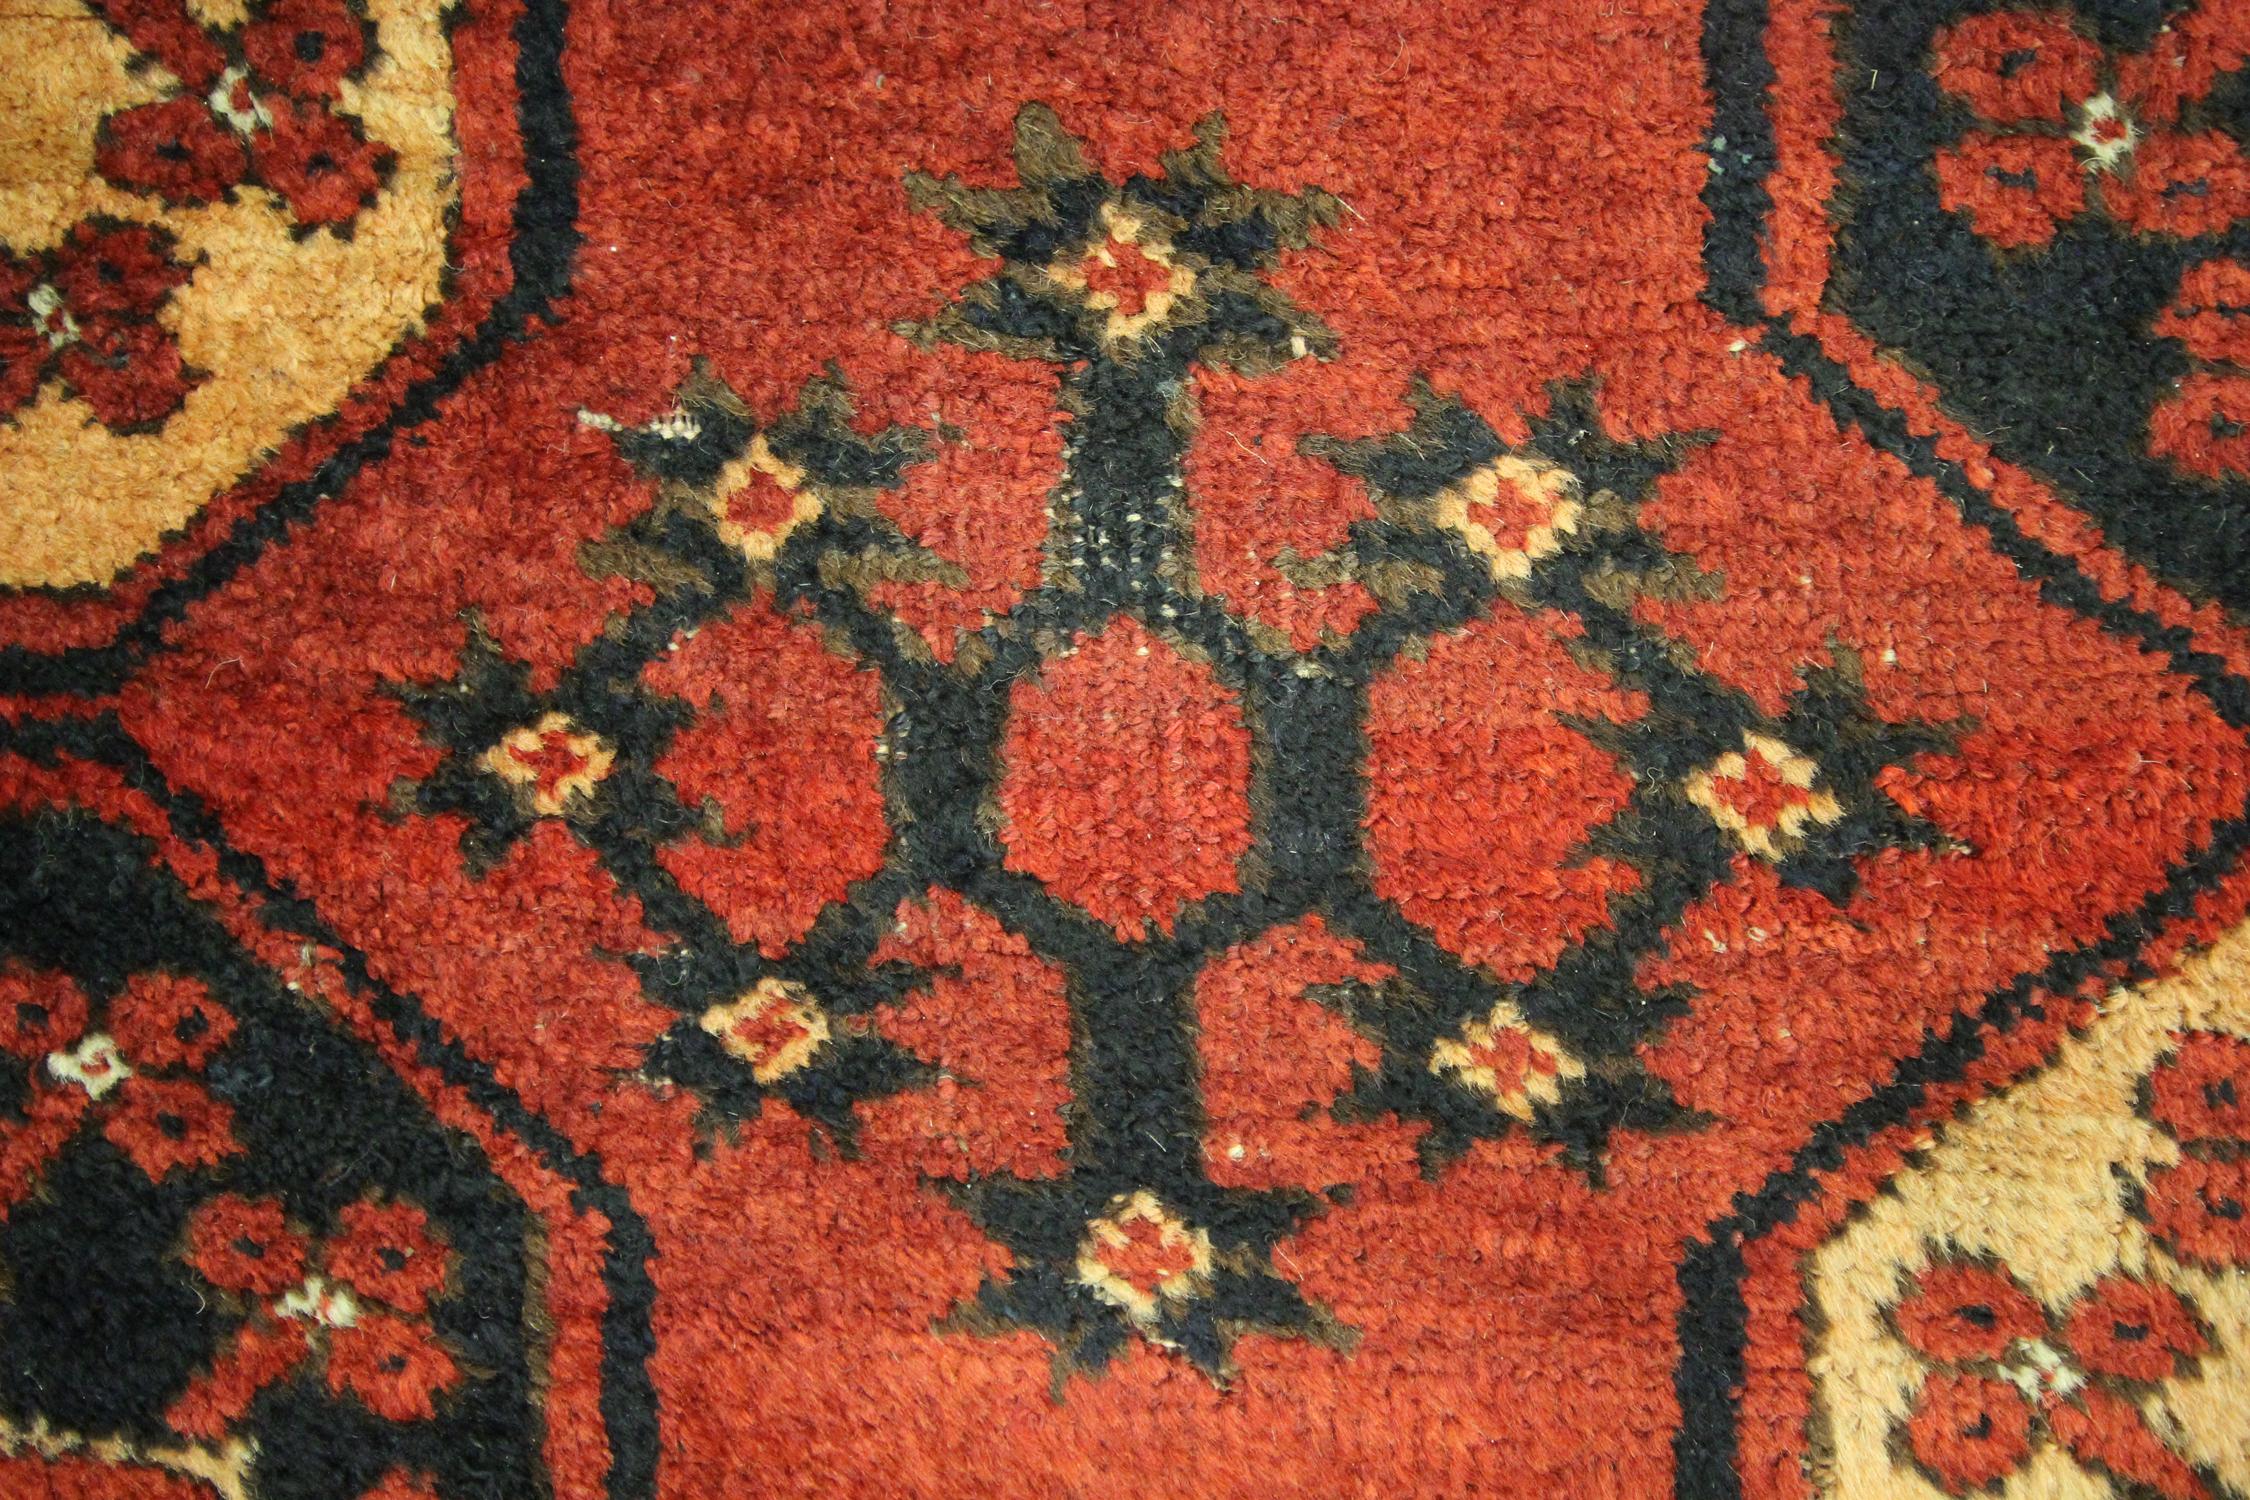 Late 19th Century Antique Rugs Turkmen Carpet Area Rug Handwoven Red Orange Wool Rug